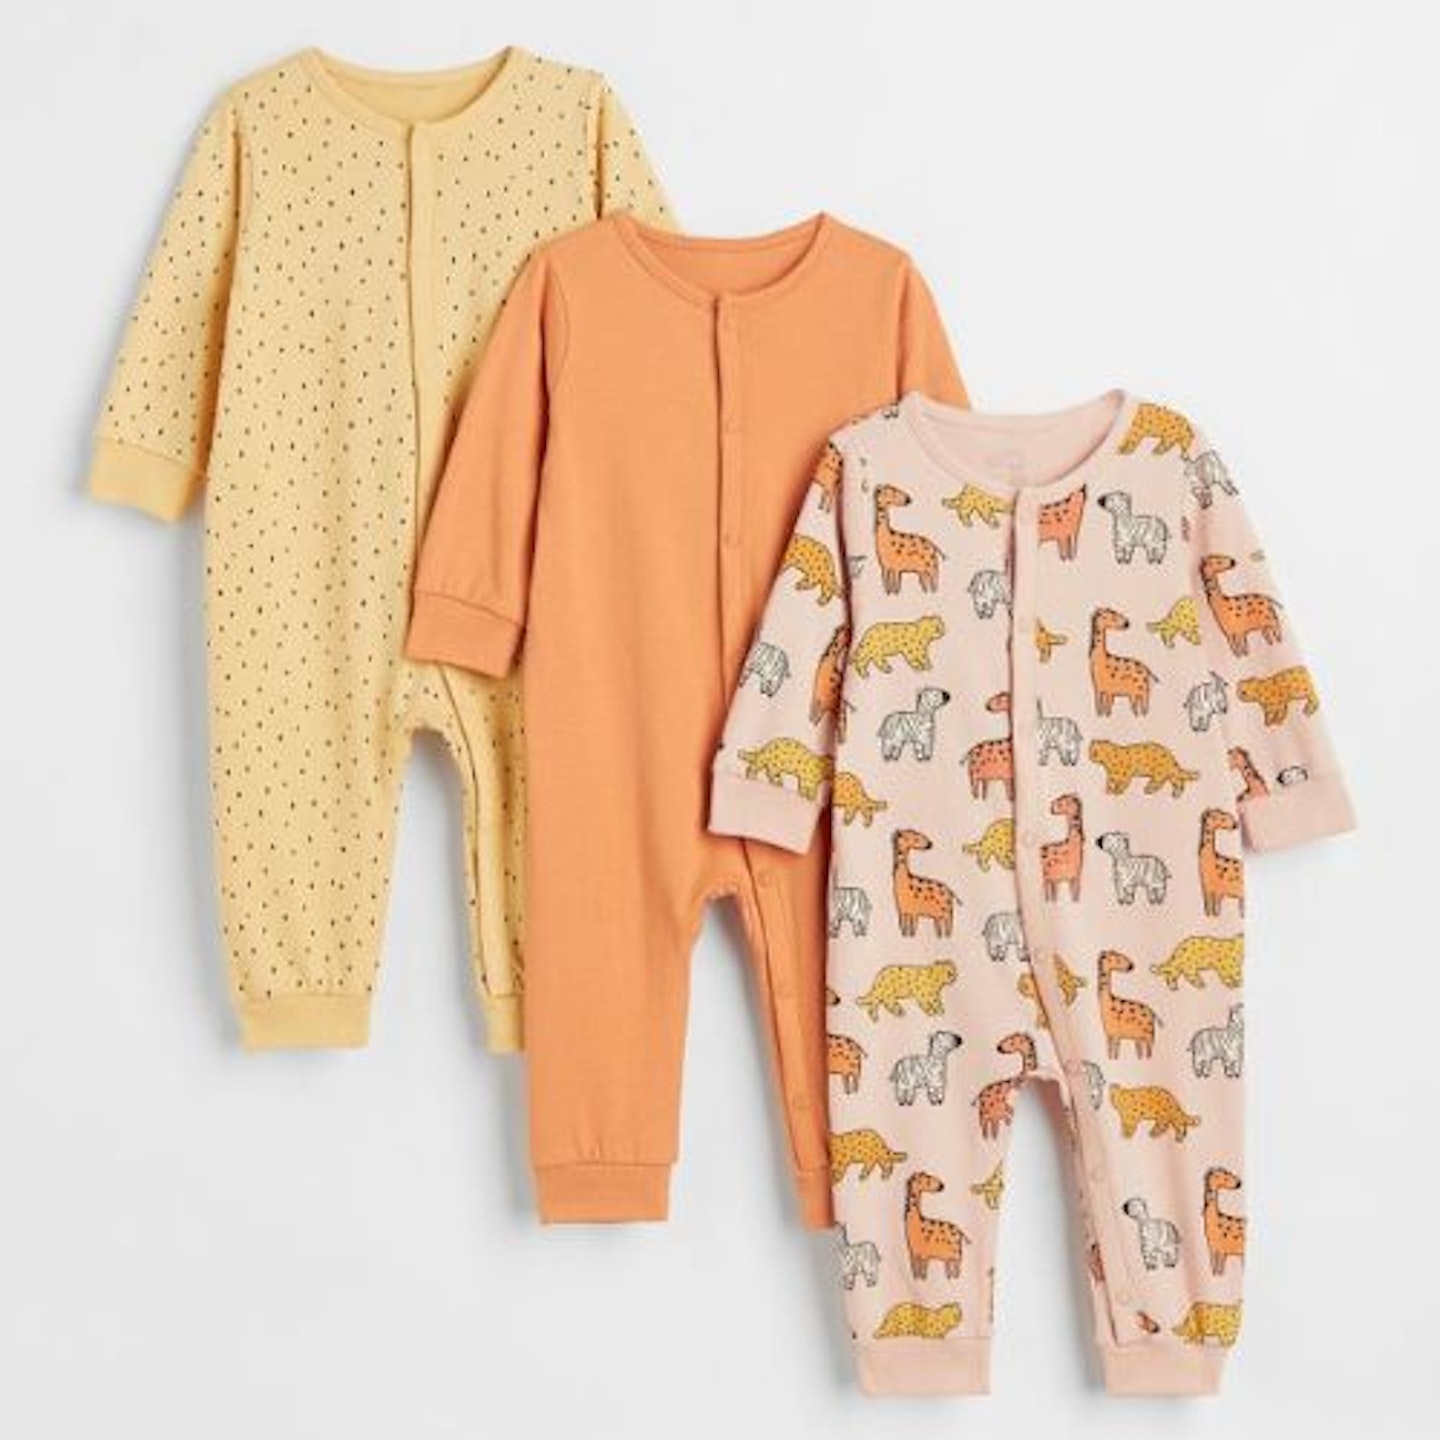 H&M - Baby sleepwear and sleepsuits